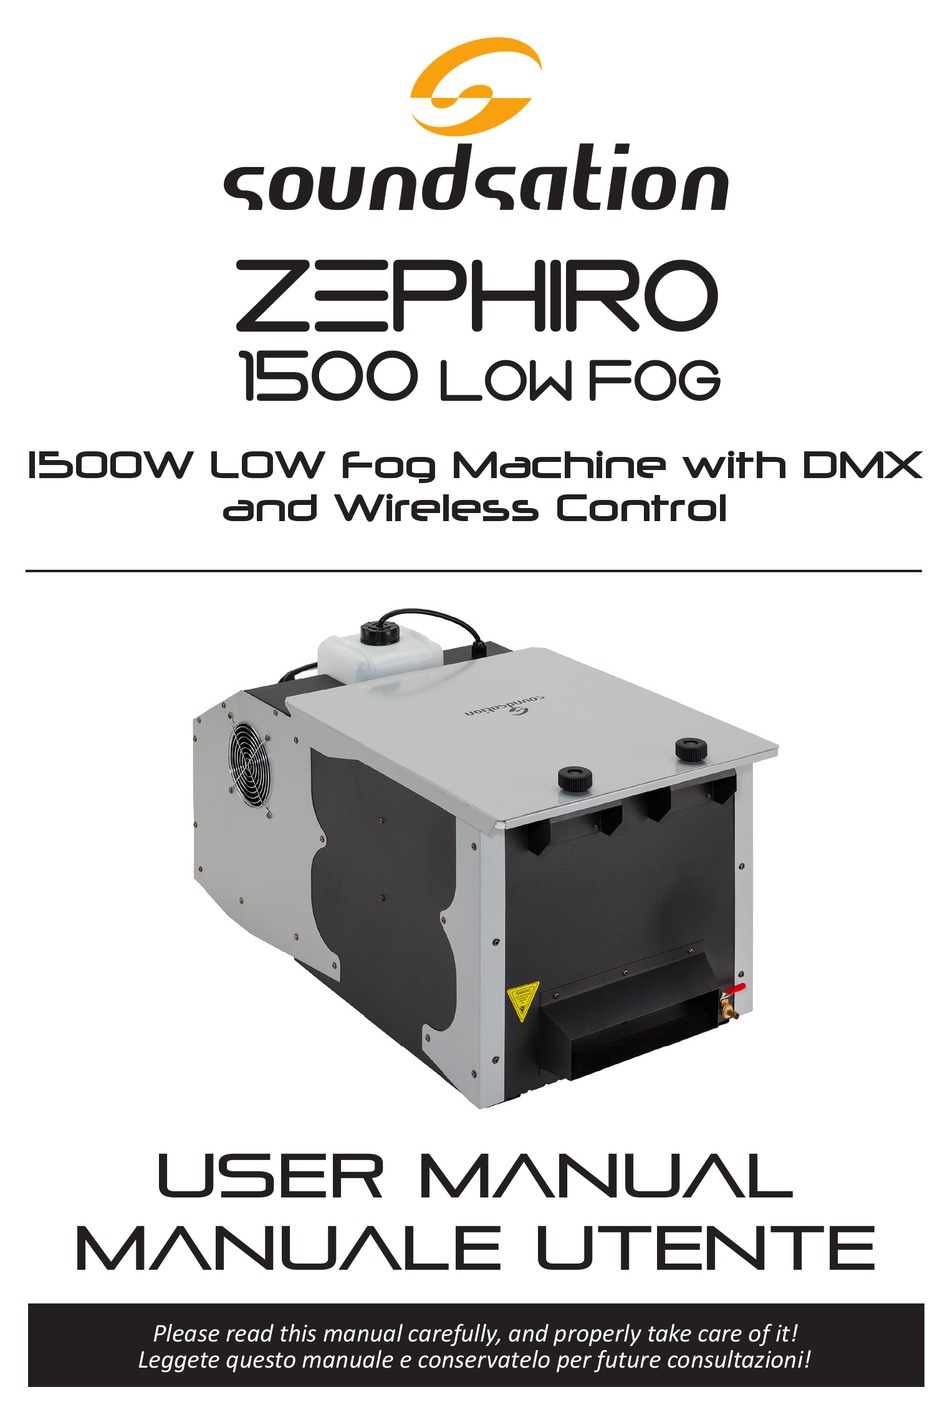 SOUNDSATION ZEPHIRO 1500 LOW FOG FOG MACHINE USER MANUAL